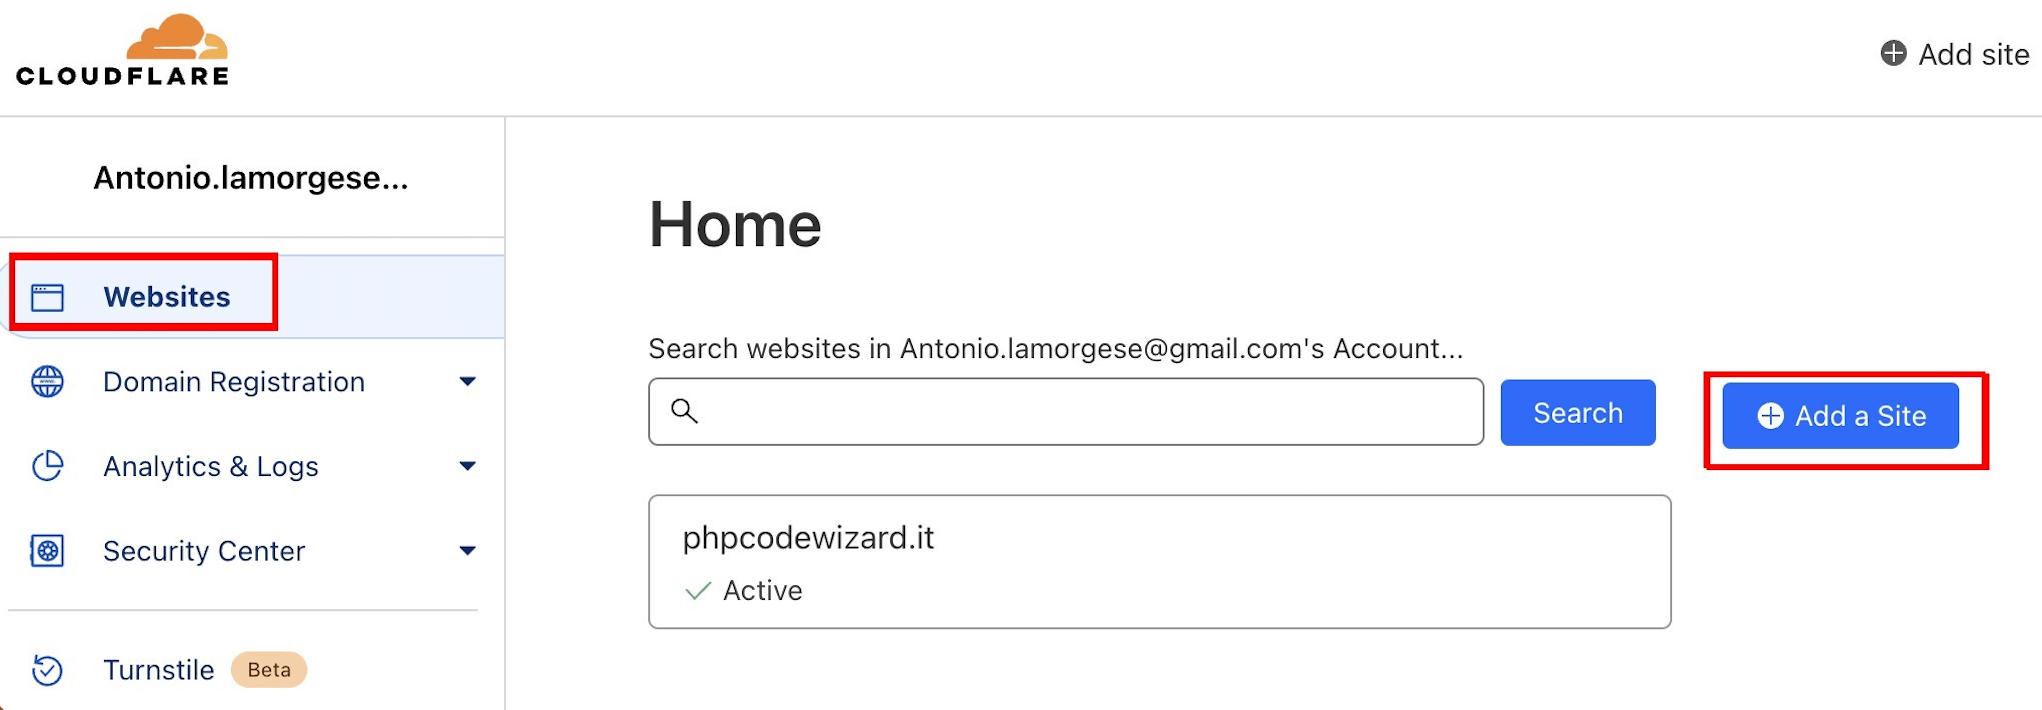 Add a site in Cloudflare